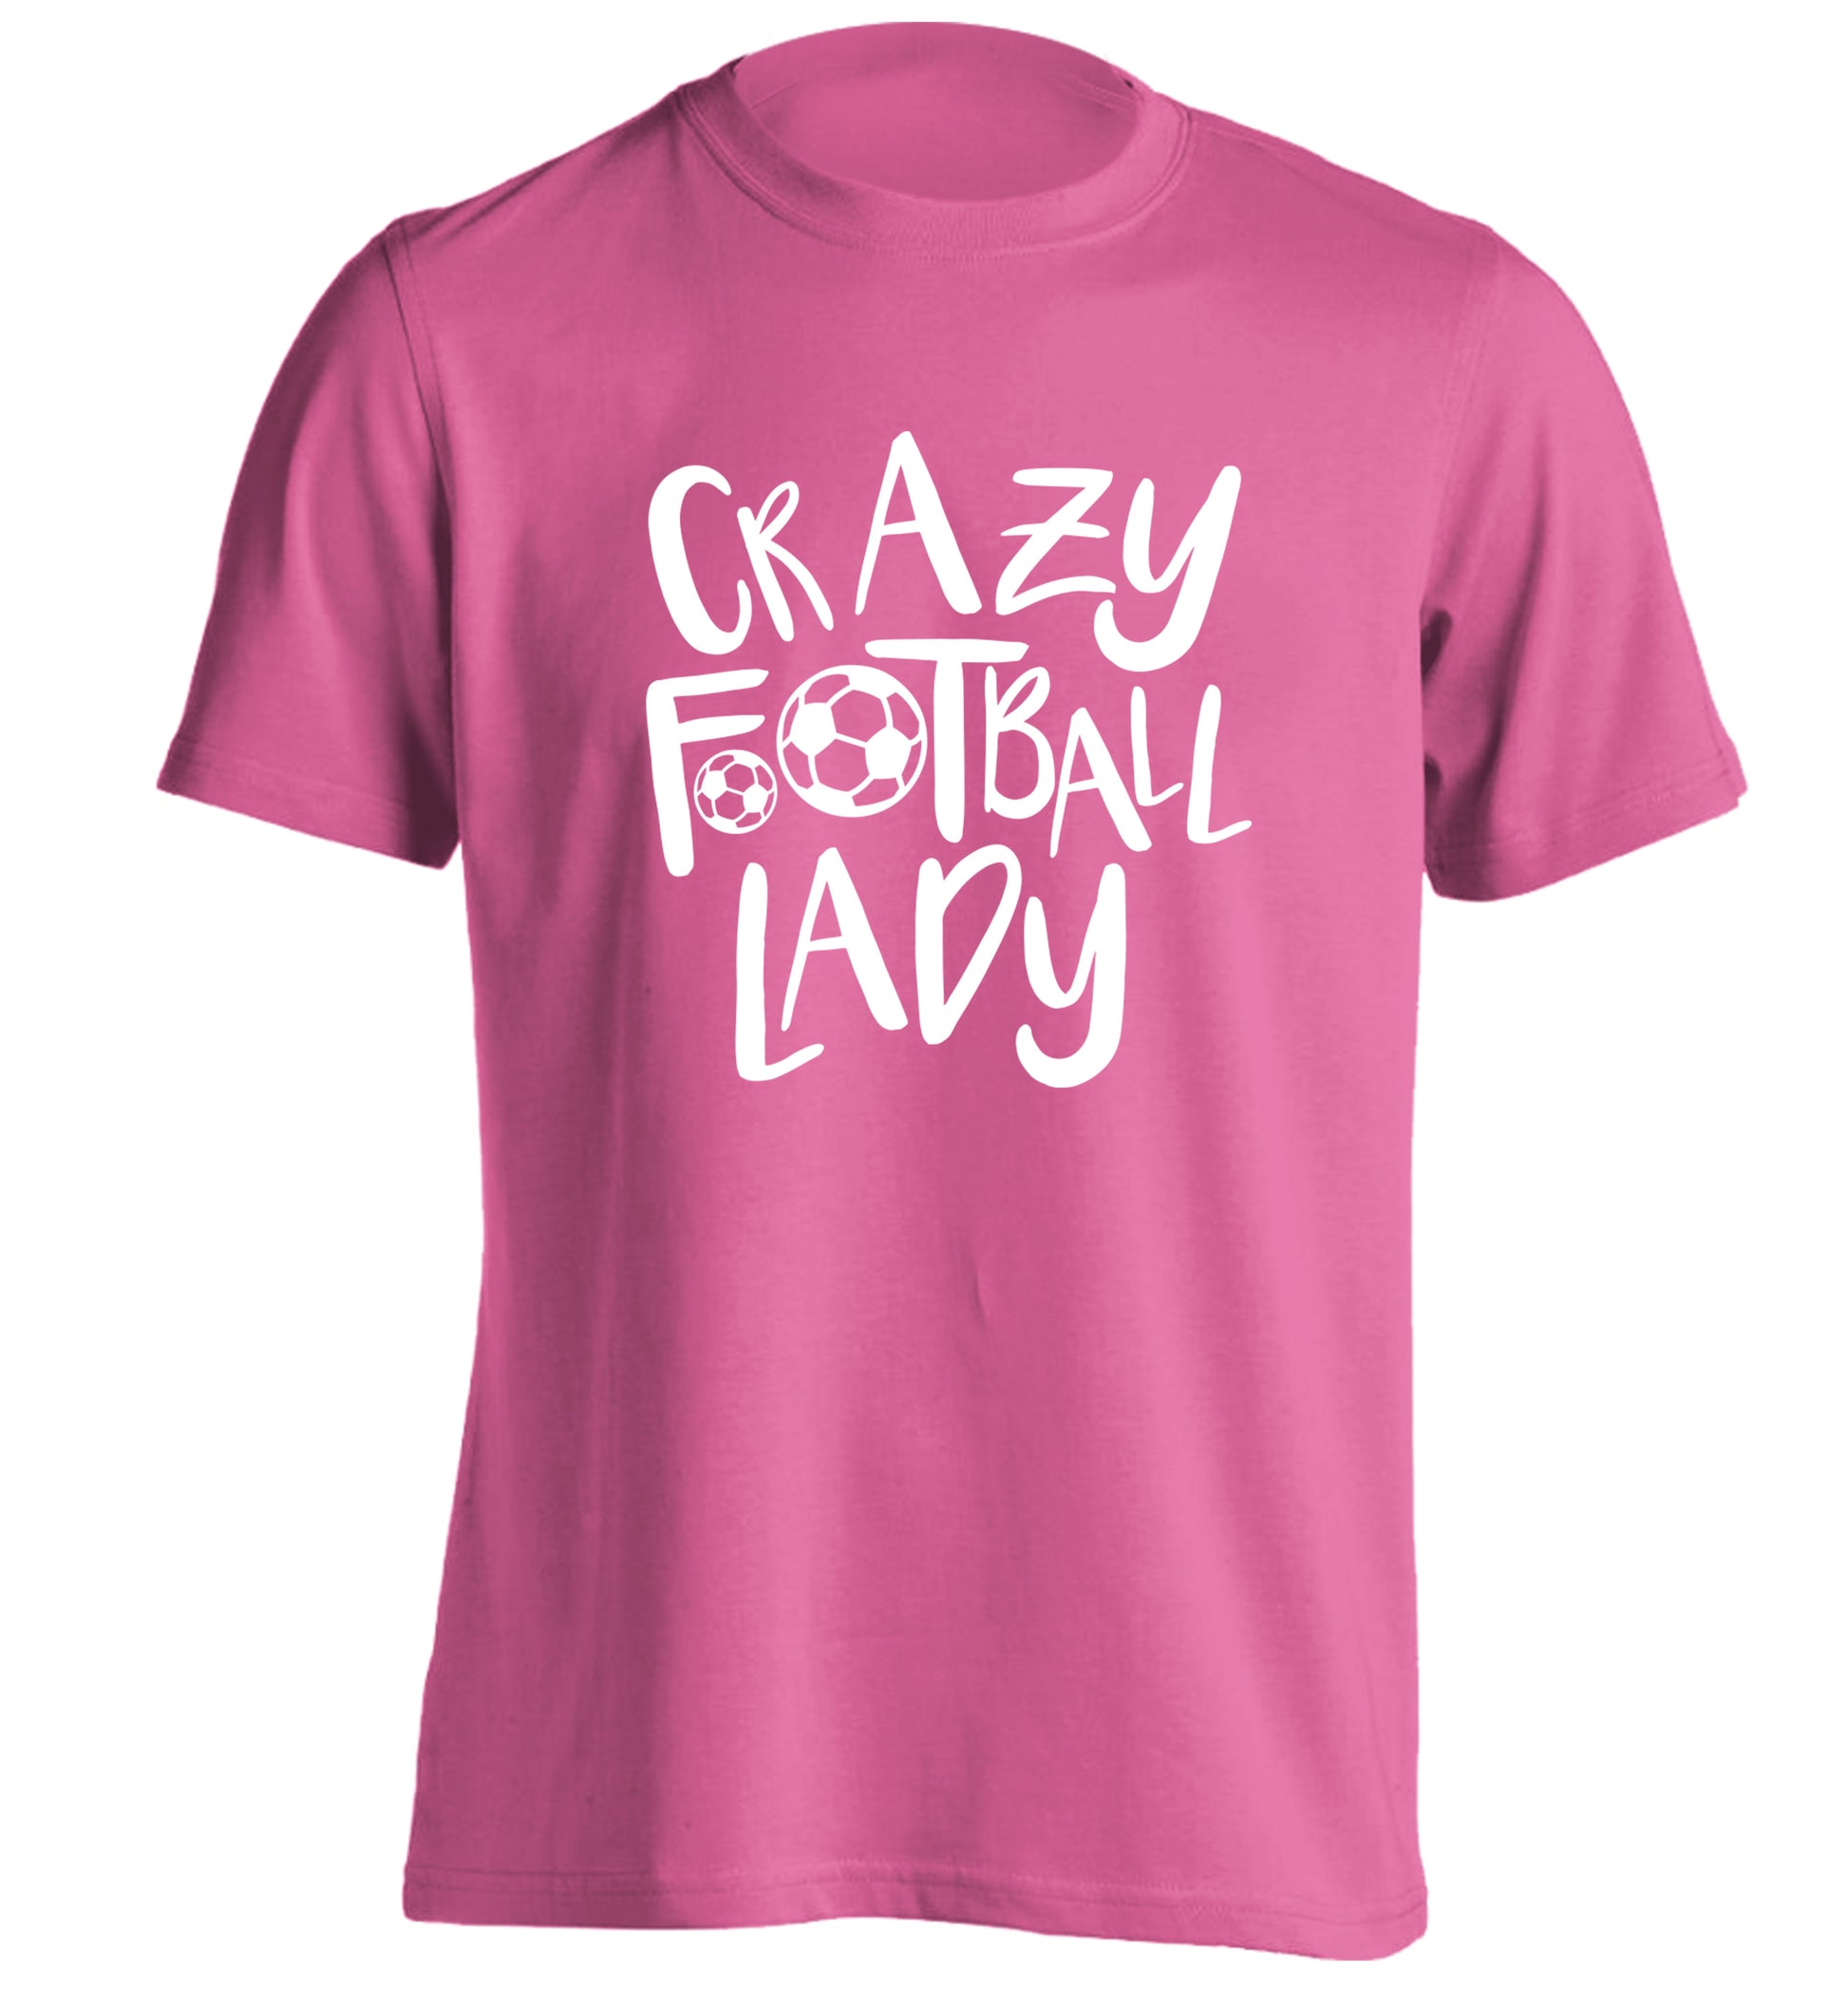 Crazy football lady adults unisexpink Tshirt 2XL